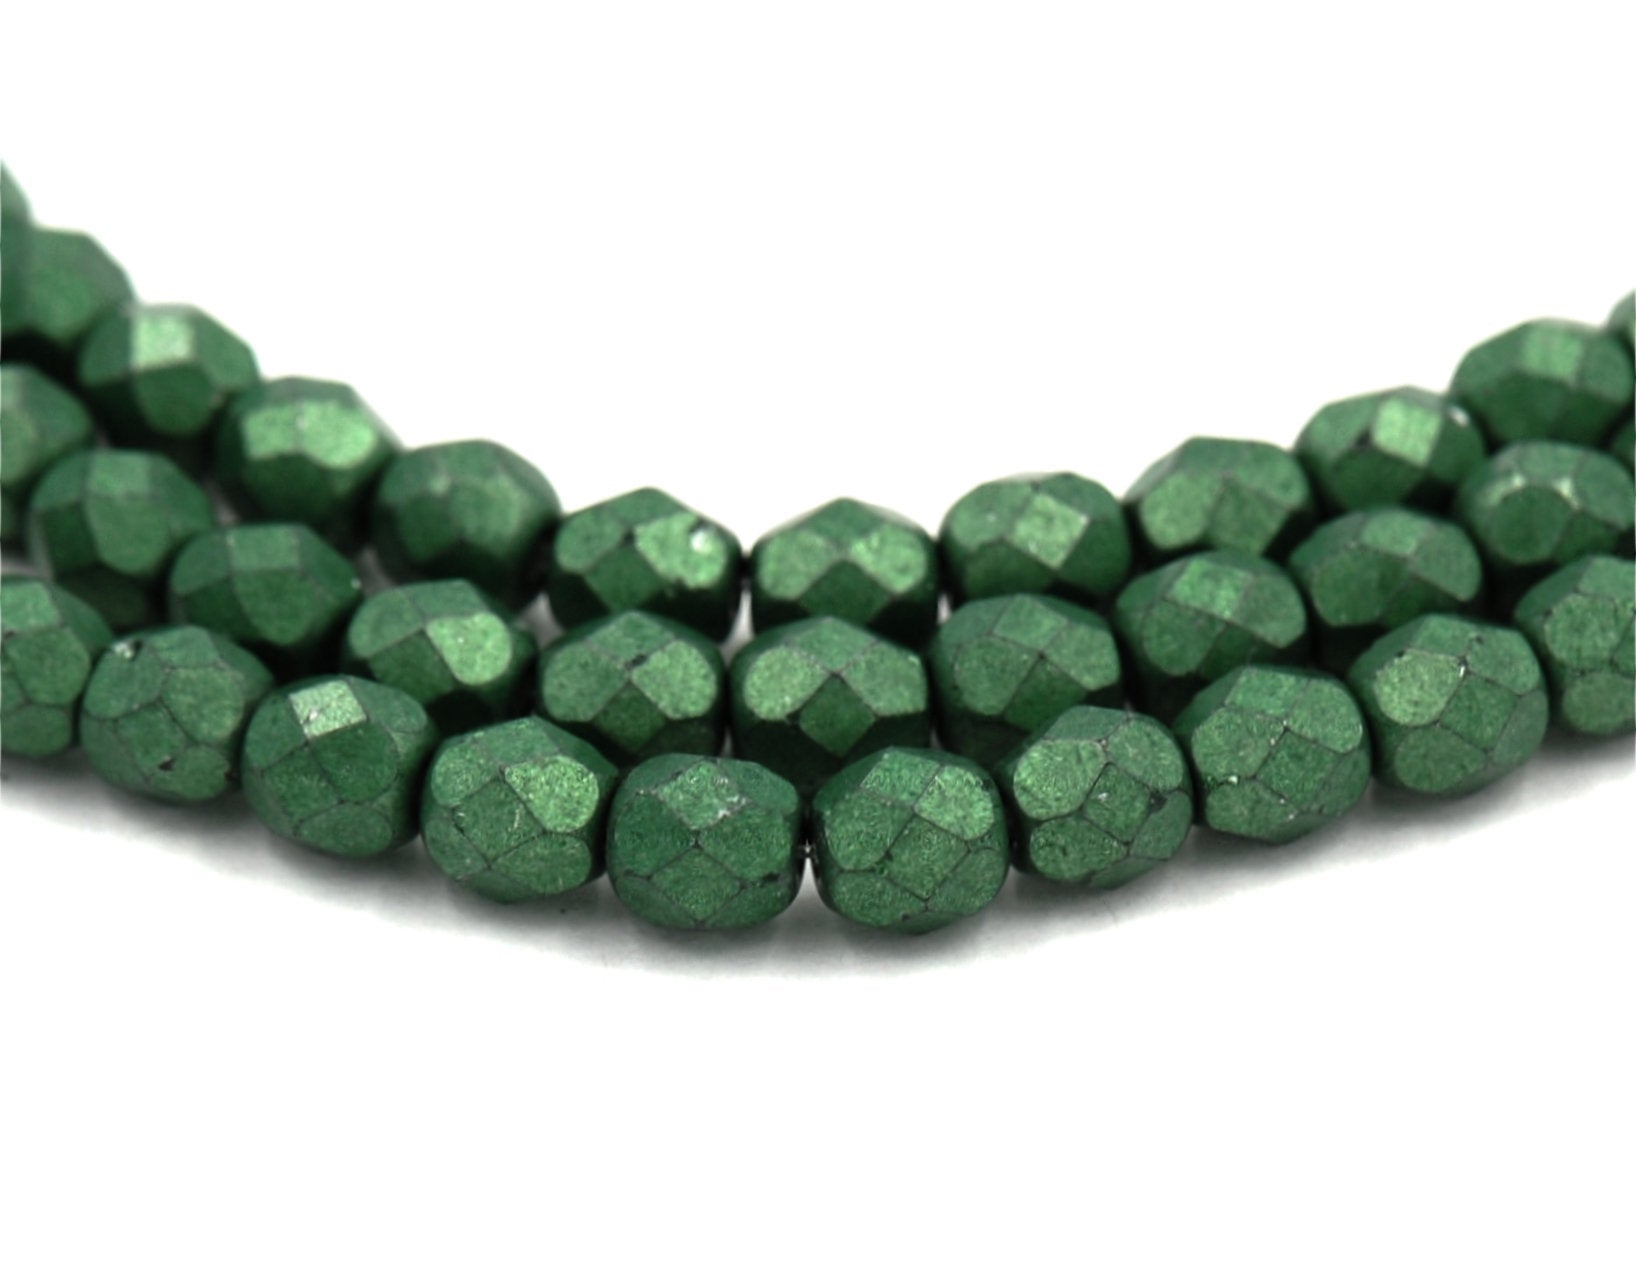 Saturated Metallic Kale Green Czech Glass Firepolished 6mm Beads -25